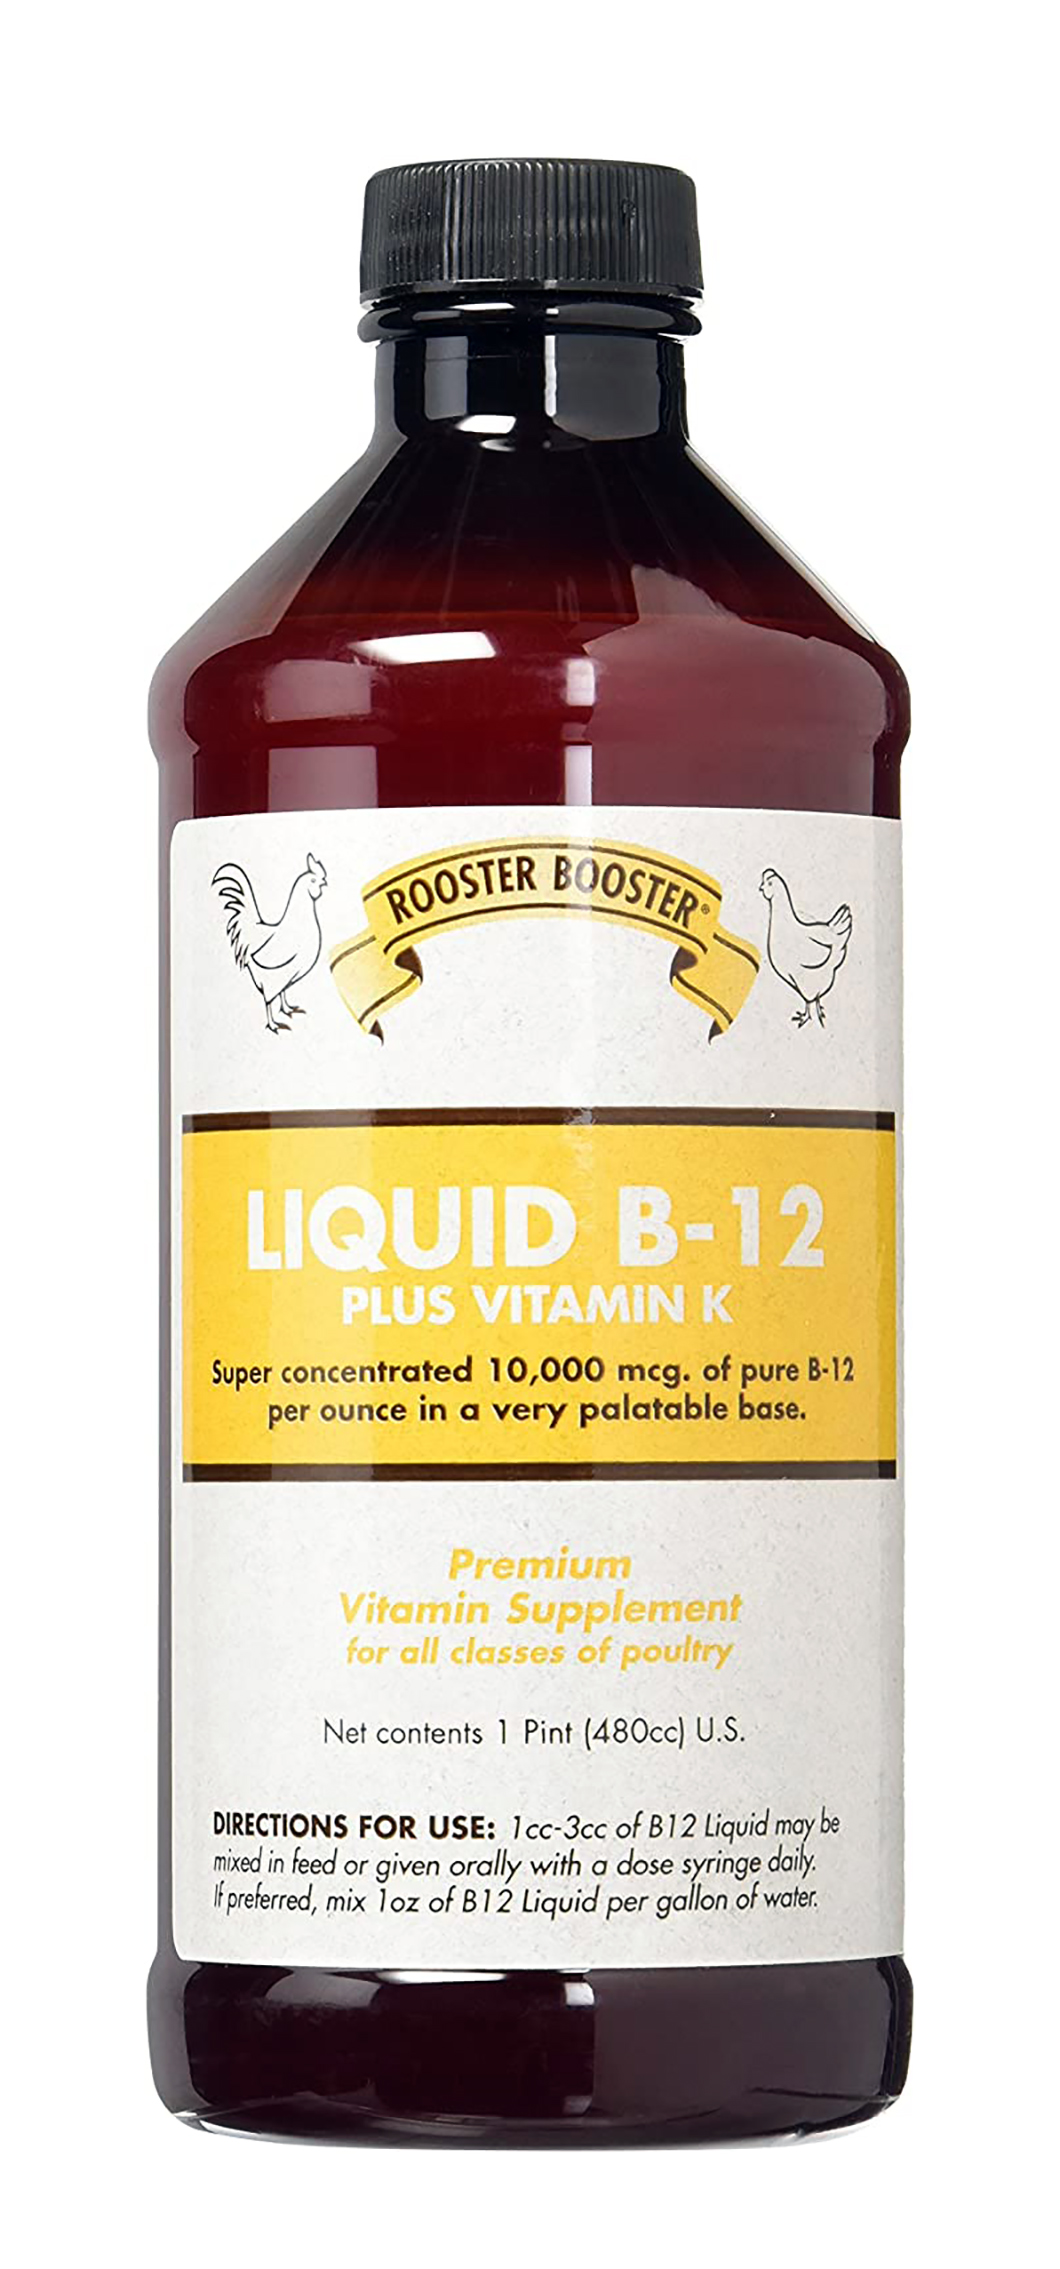 B-12 Liquid review